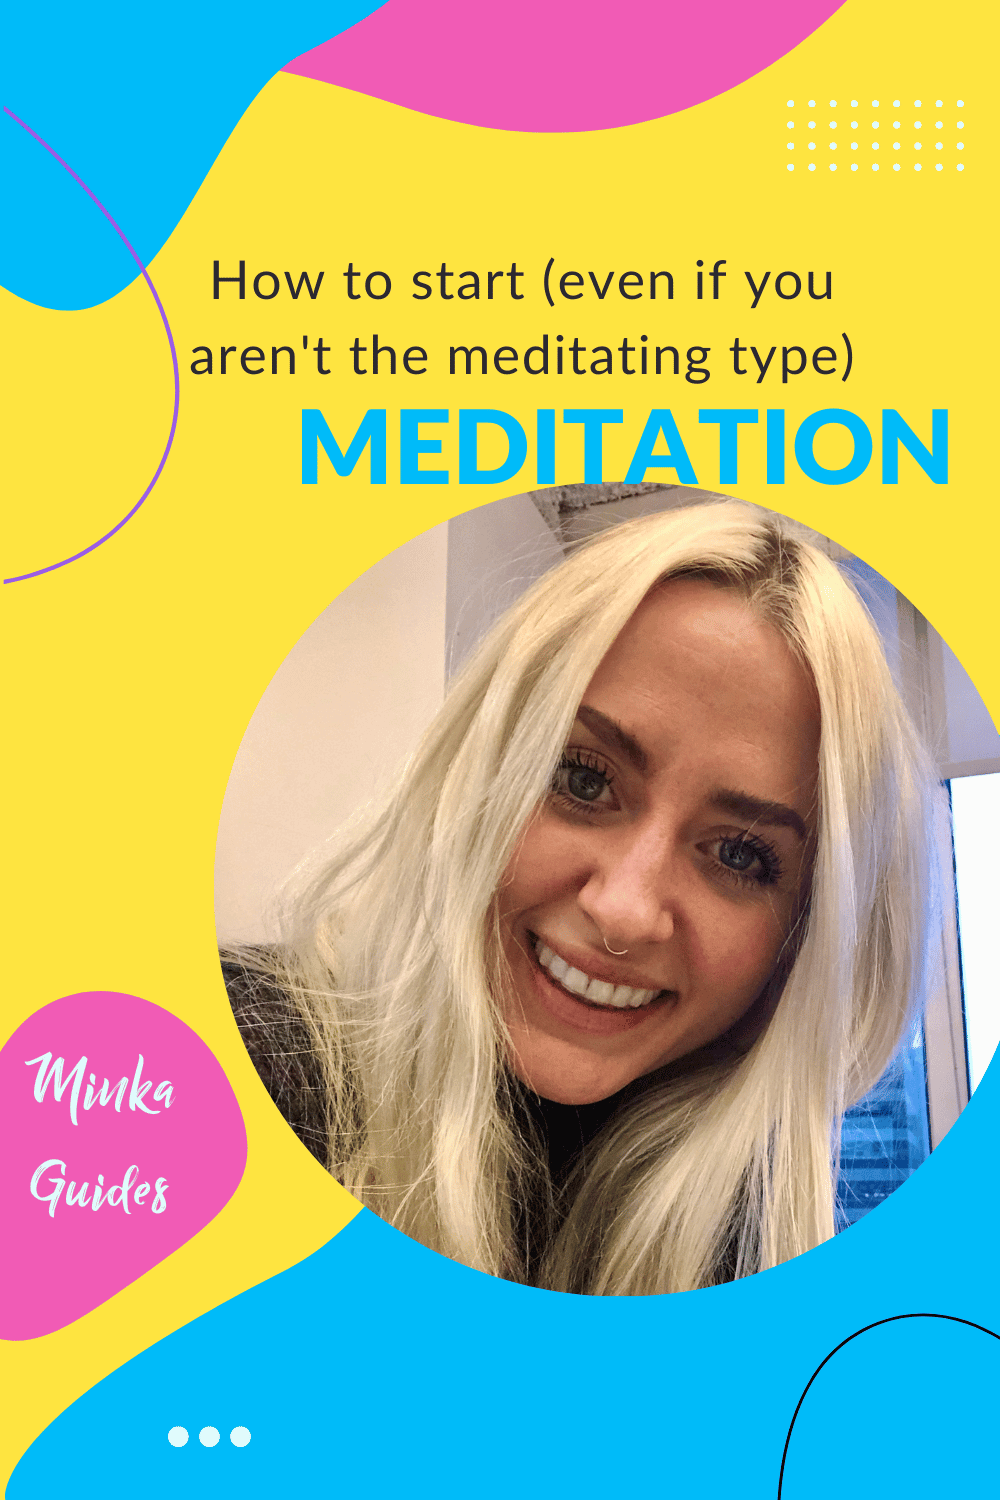 How to start meditating | Minka Guides